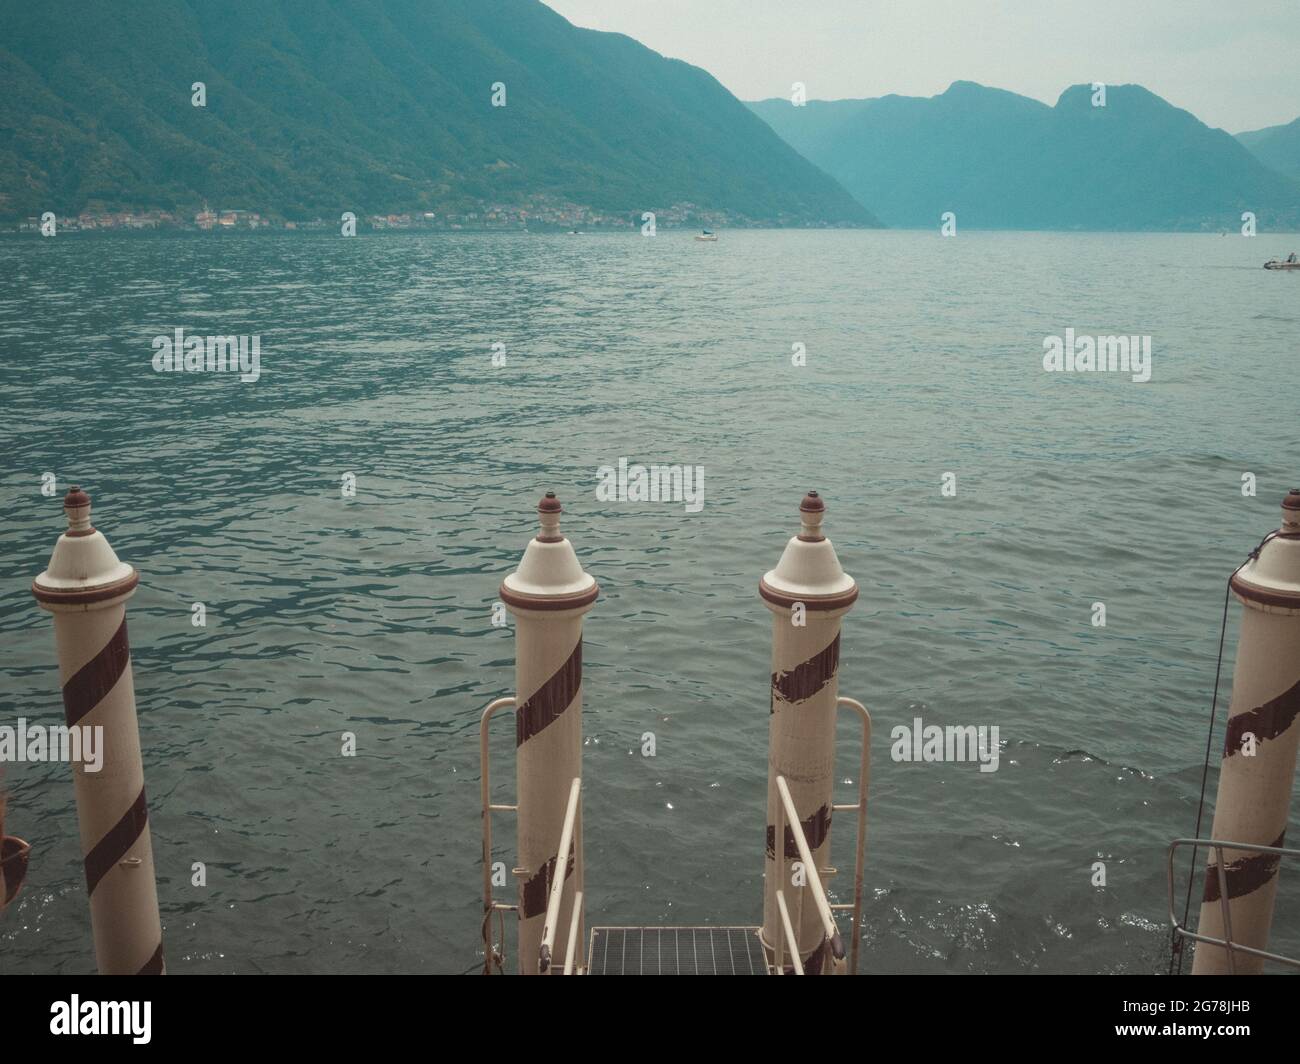 Como Lake, Italy Stock Photo